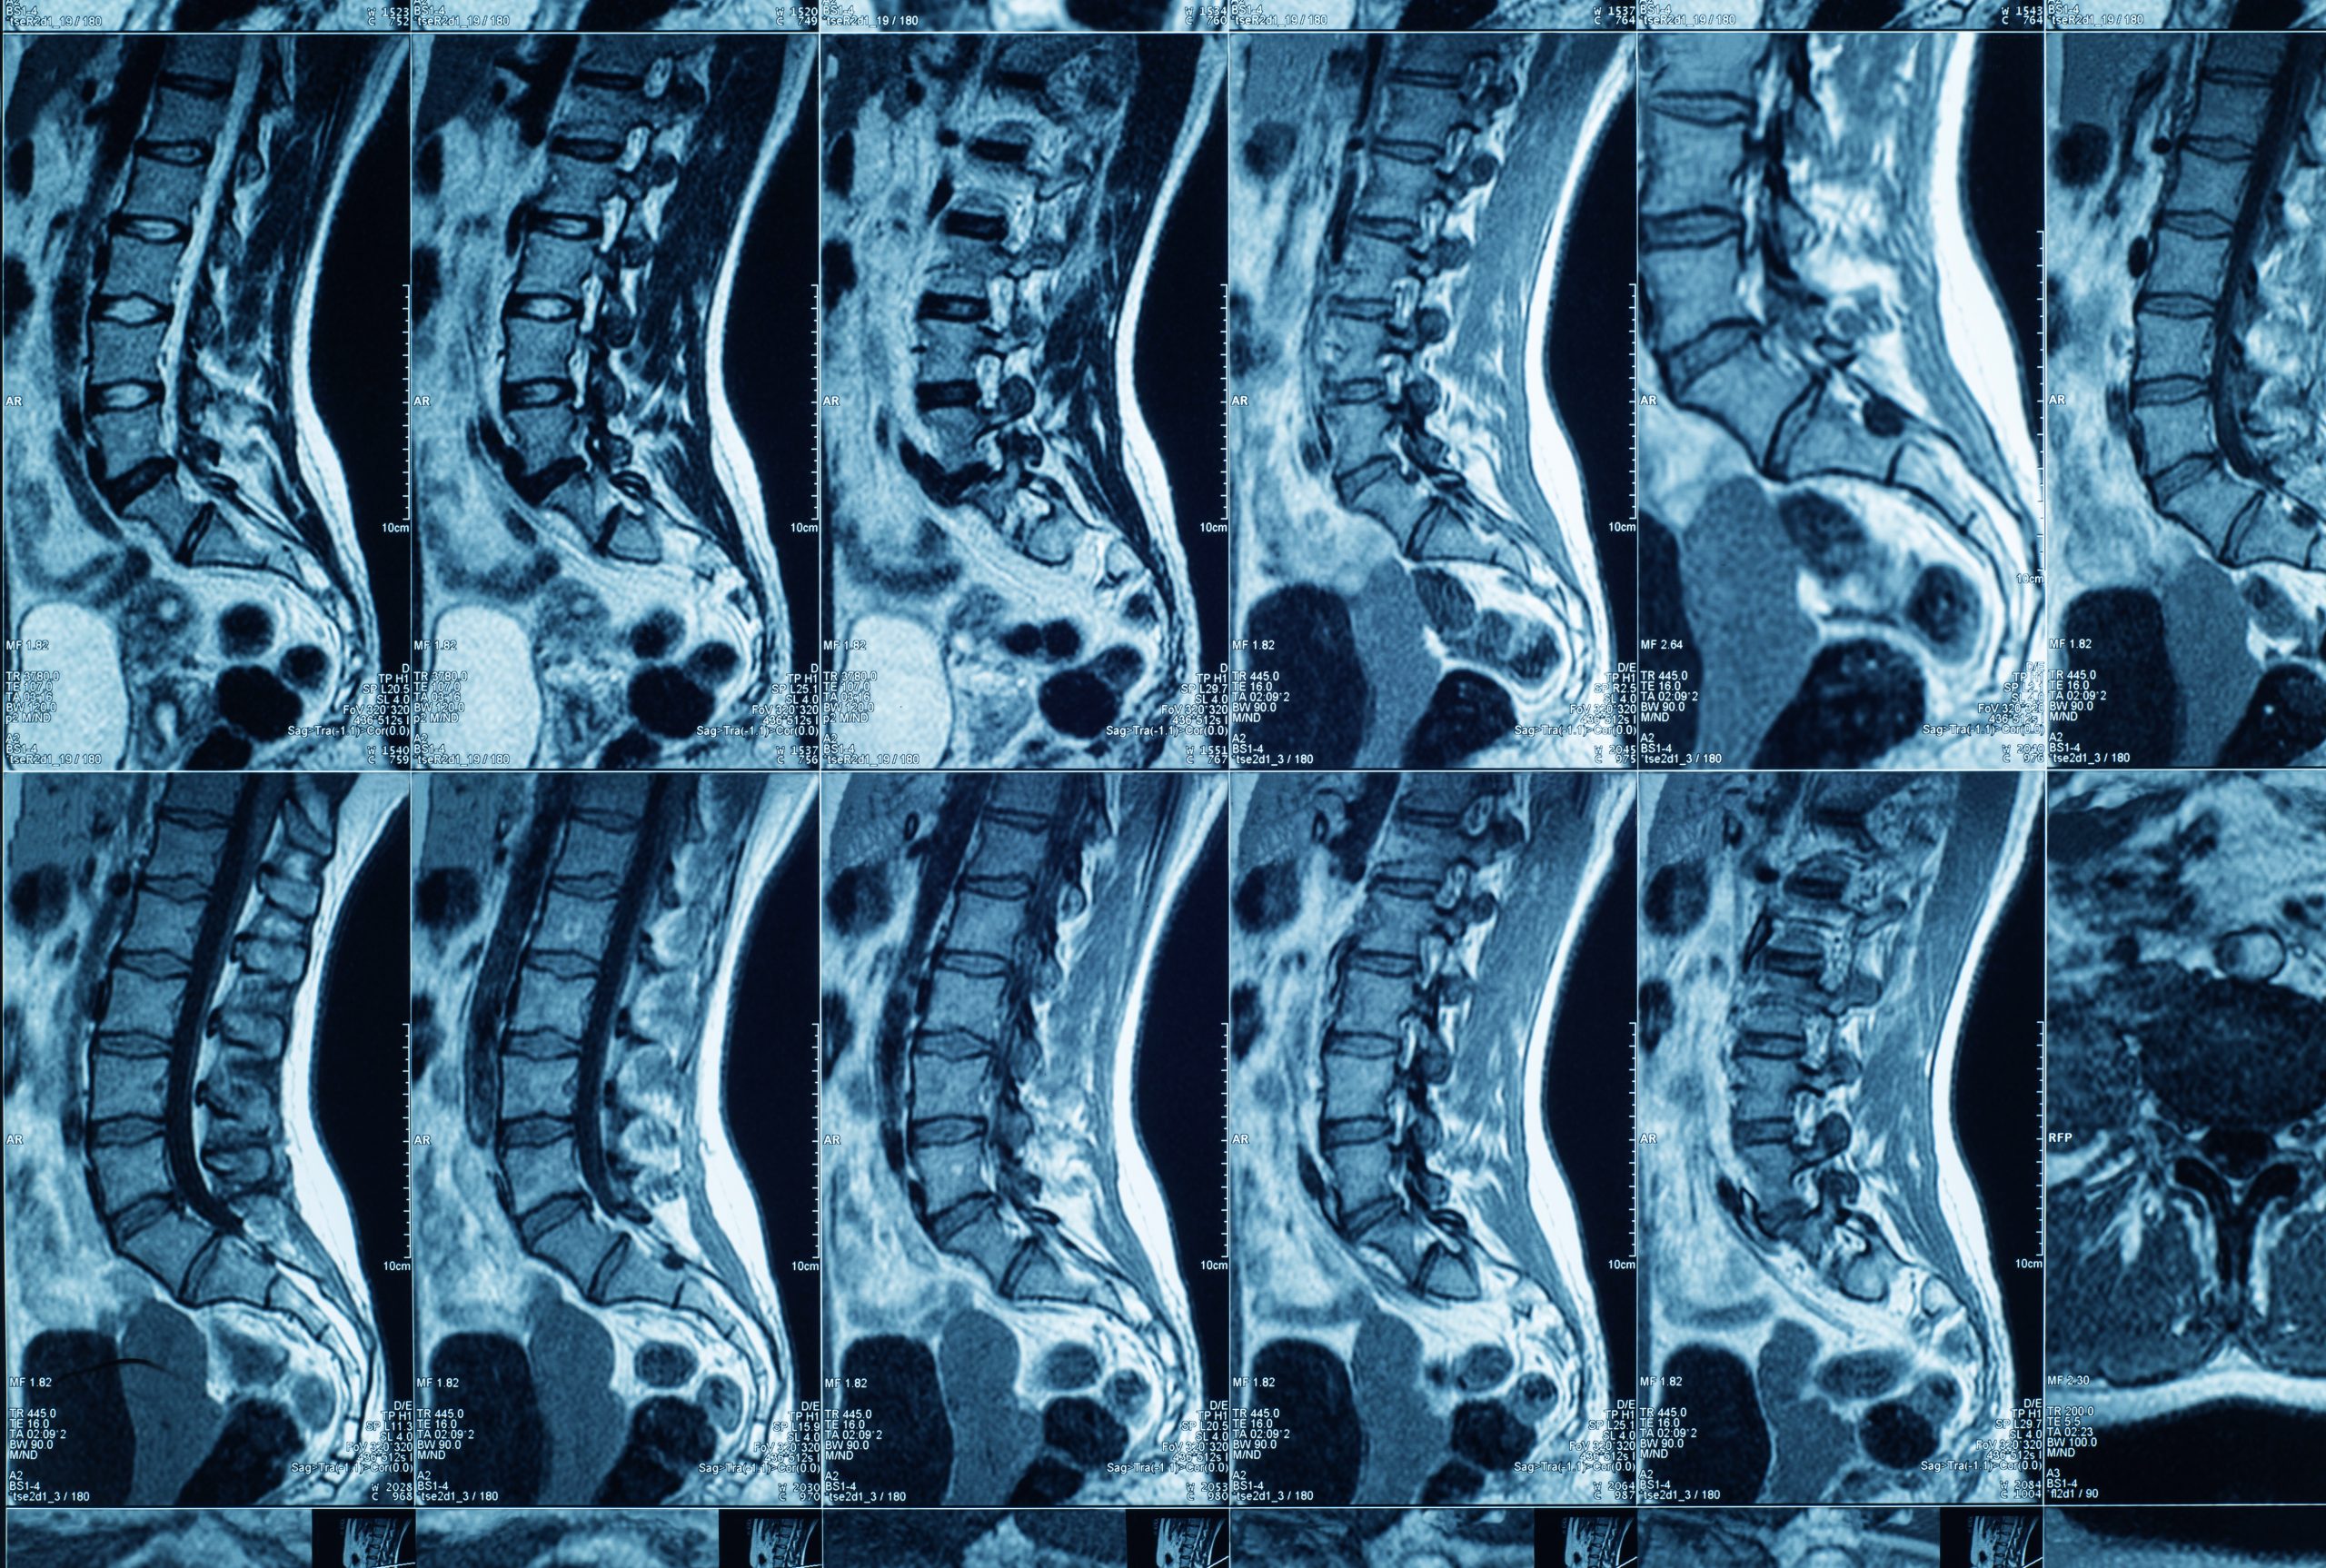 Magnetic resonance imaging of human spine